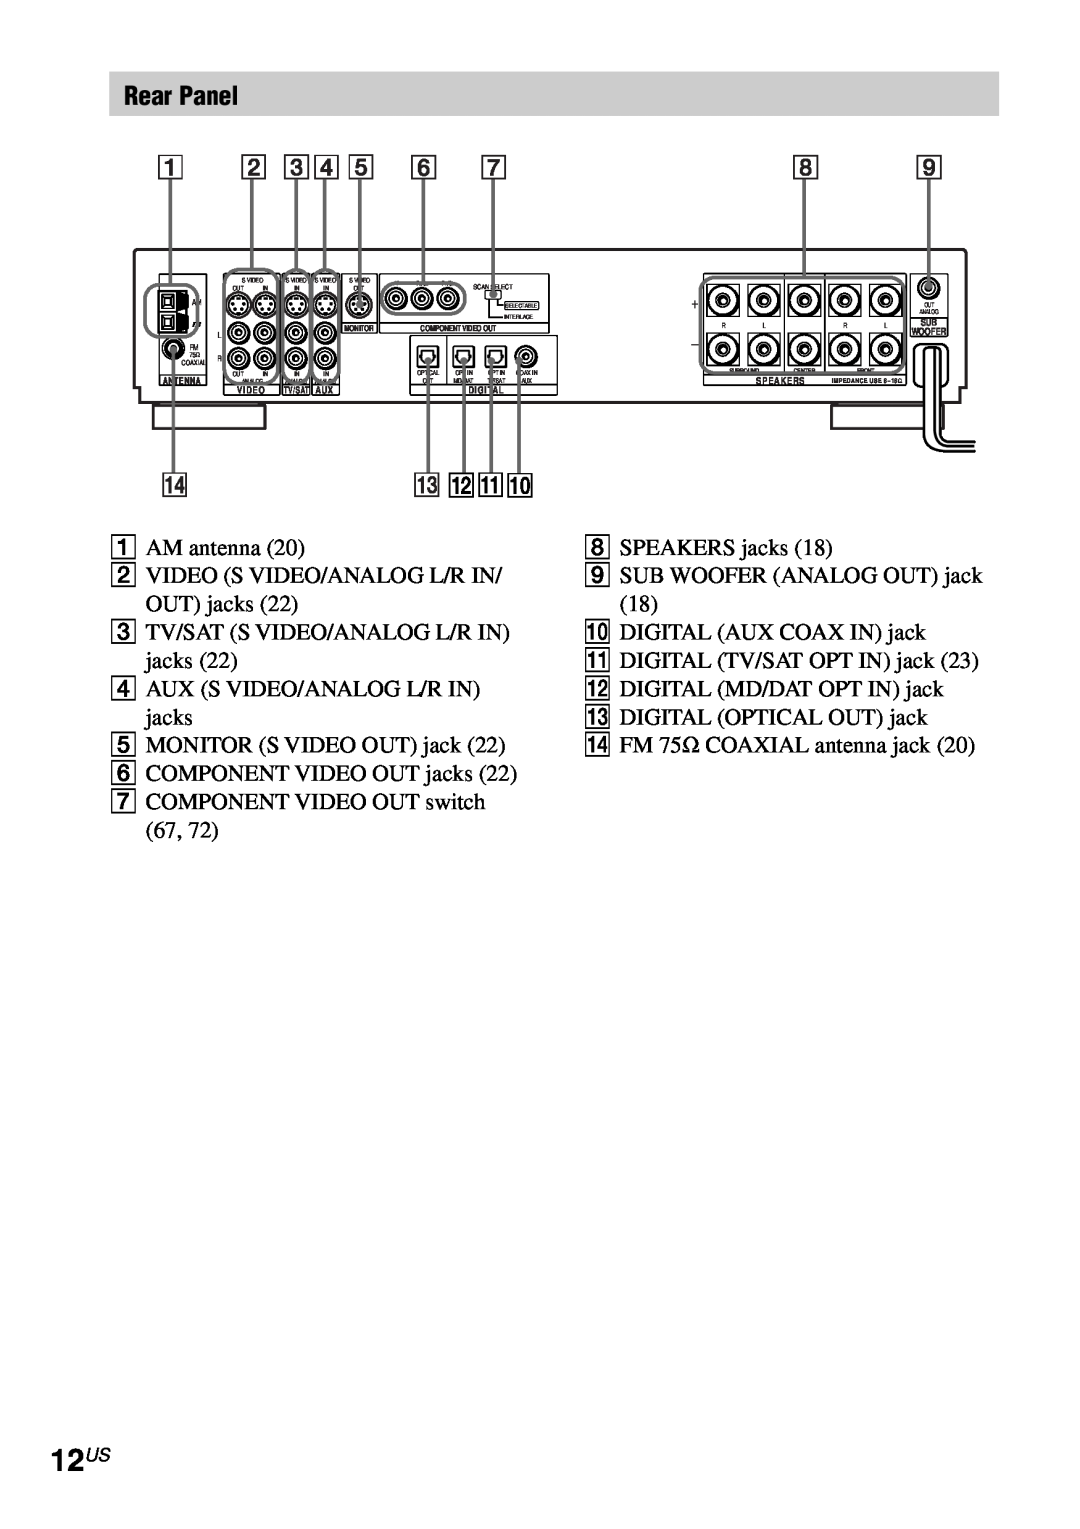 Sony AVD-S50ES operating instructions 12US, Rear Panel 